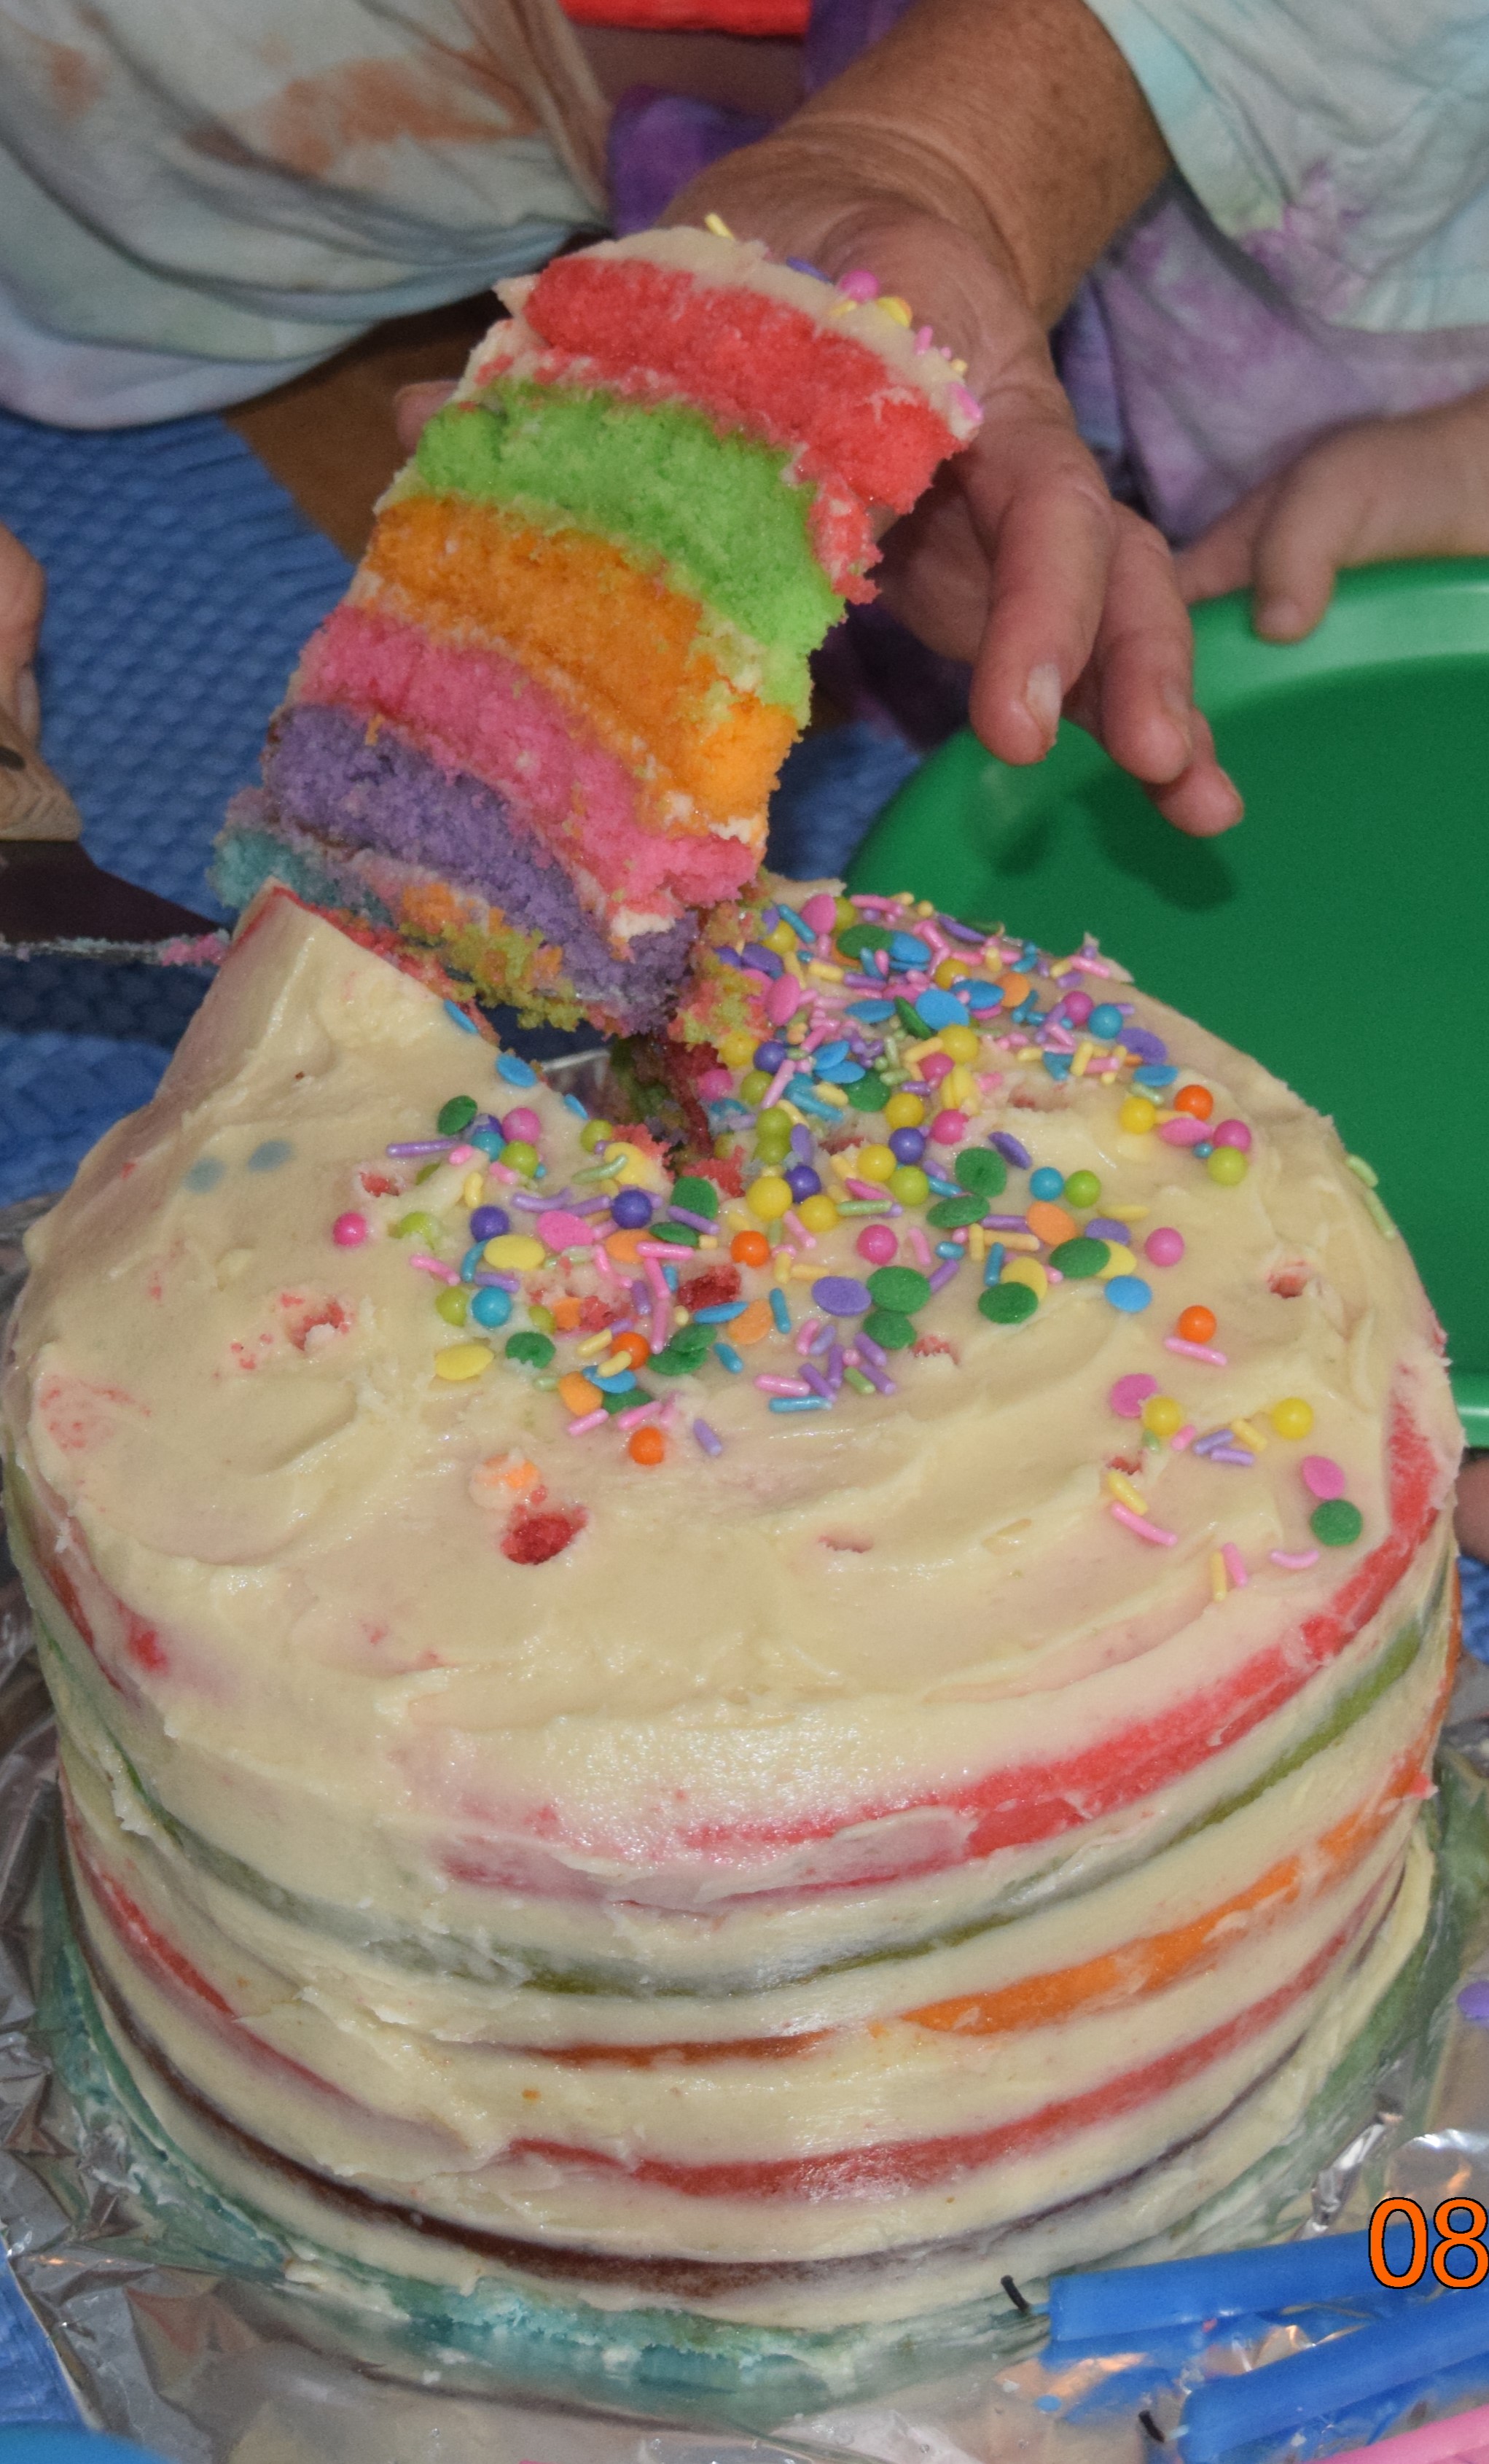 Grandmother-made, grandchildren-decorated Rainbow Cake.